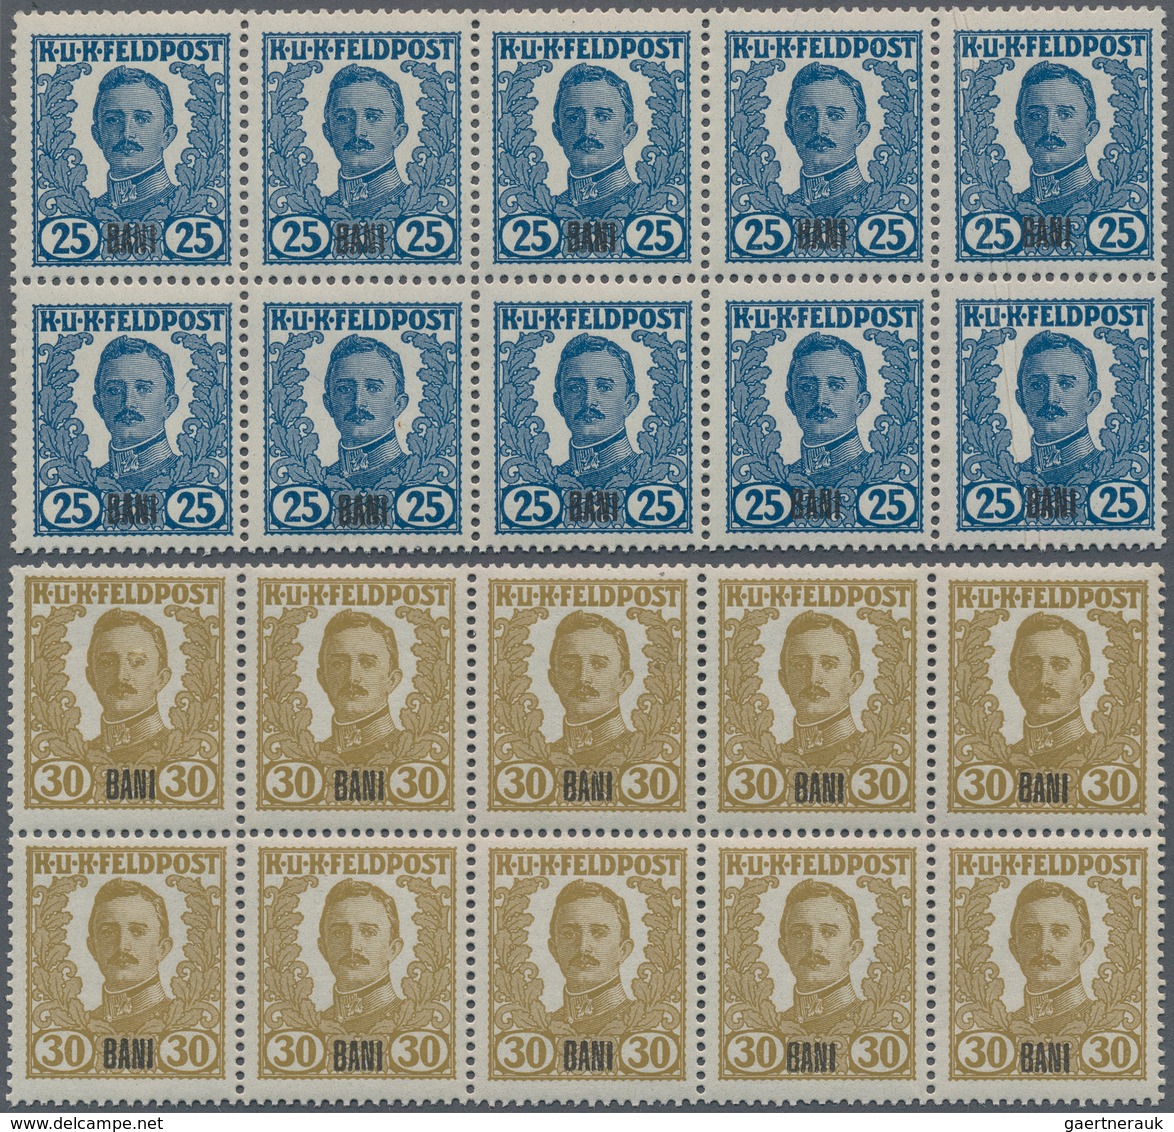 Rumänien - Besonderheiten: 1918 UNISSUED Austrian-Hungarian Field Post 'King Karl I.' set overprinte